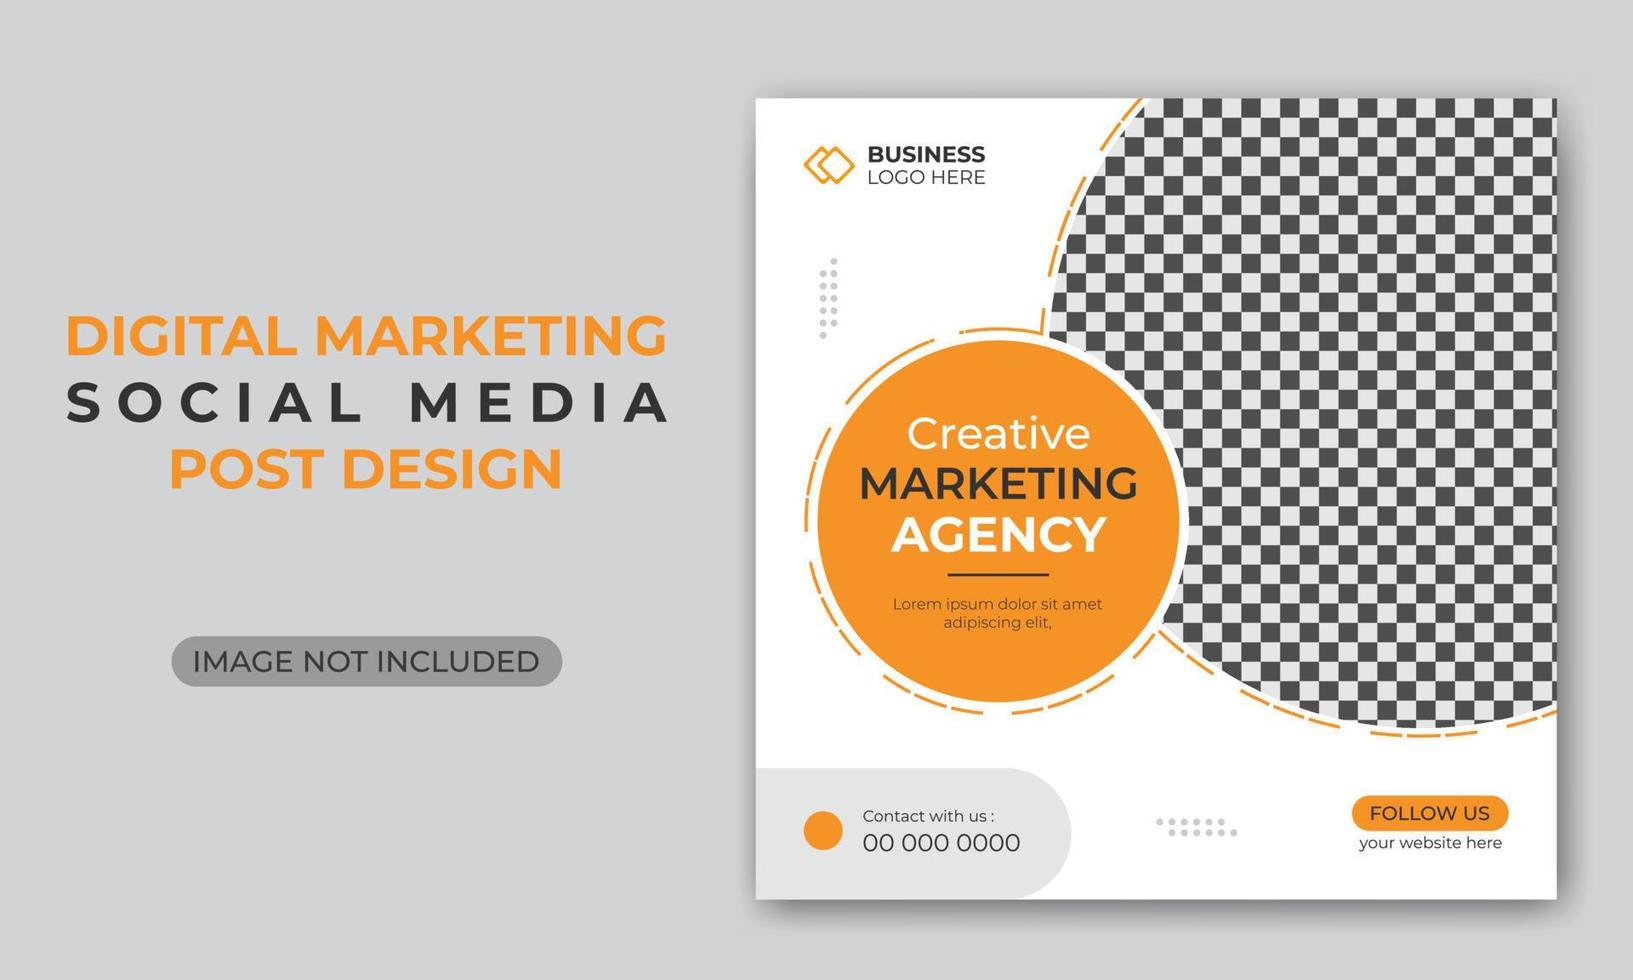 Corporate business digital marketing agency social media post or web banner design template vector